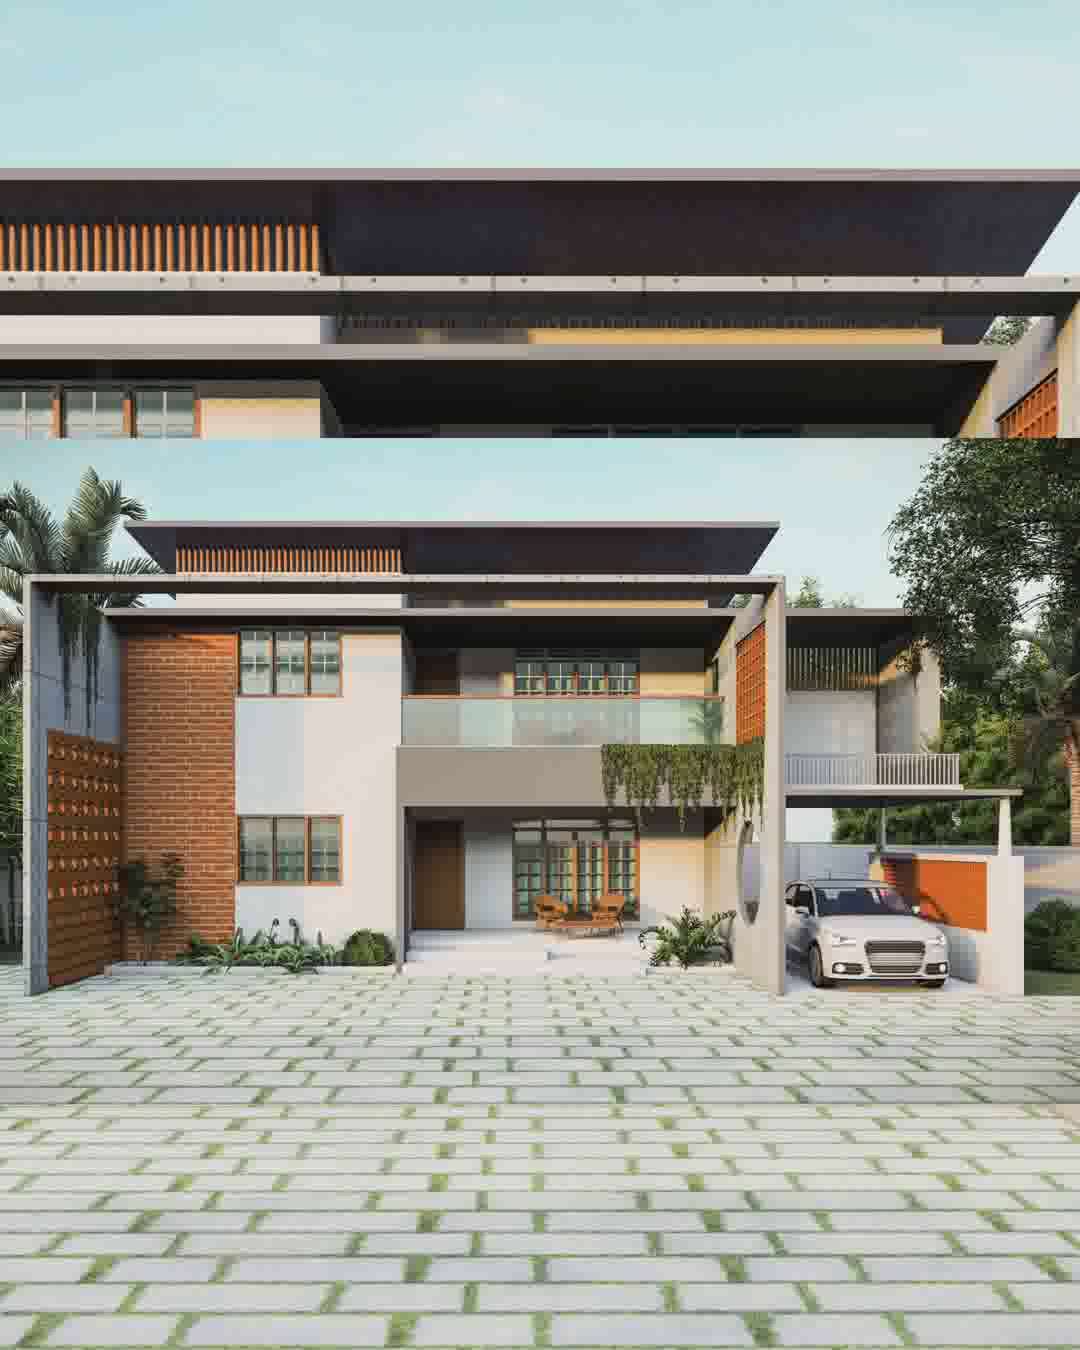 Exterior renovation at Malappuram 💫
.
.
#Architect #architecturedesigns #Architectural&Interior #kerala_architecture #archituredesign #design #elevation #frontelevationdesign